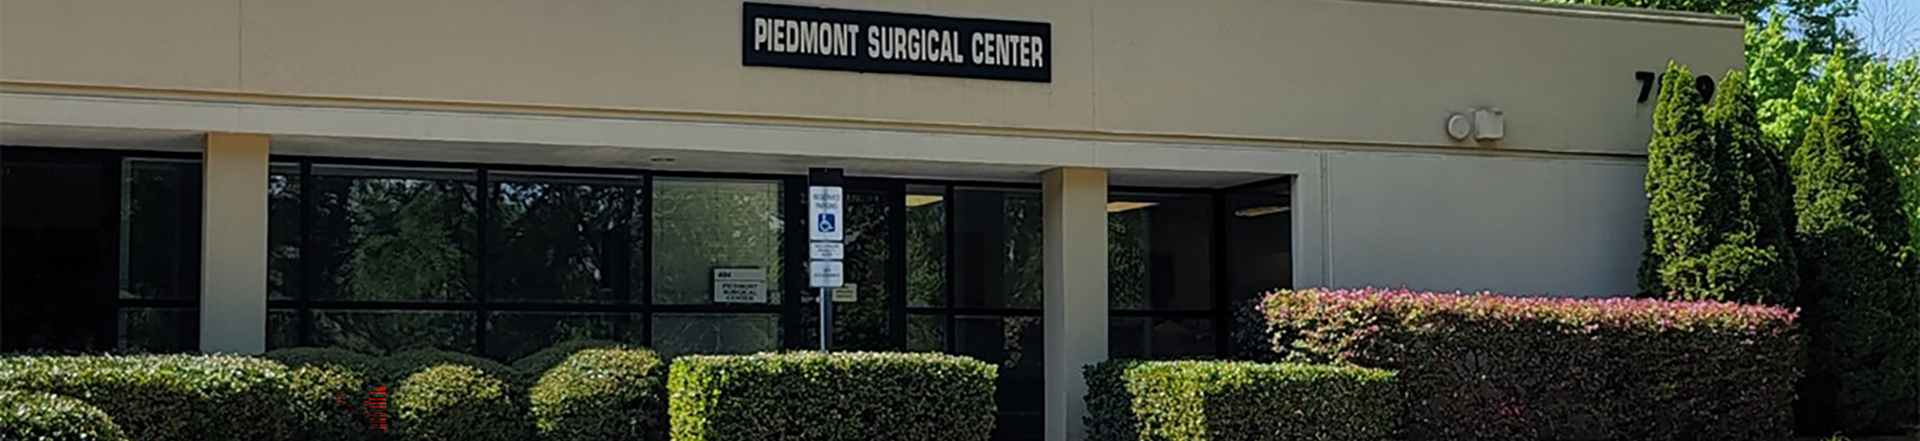 Piedmont Surgical Center